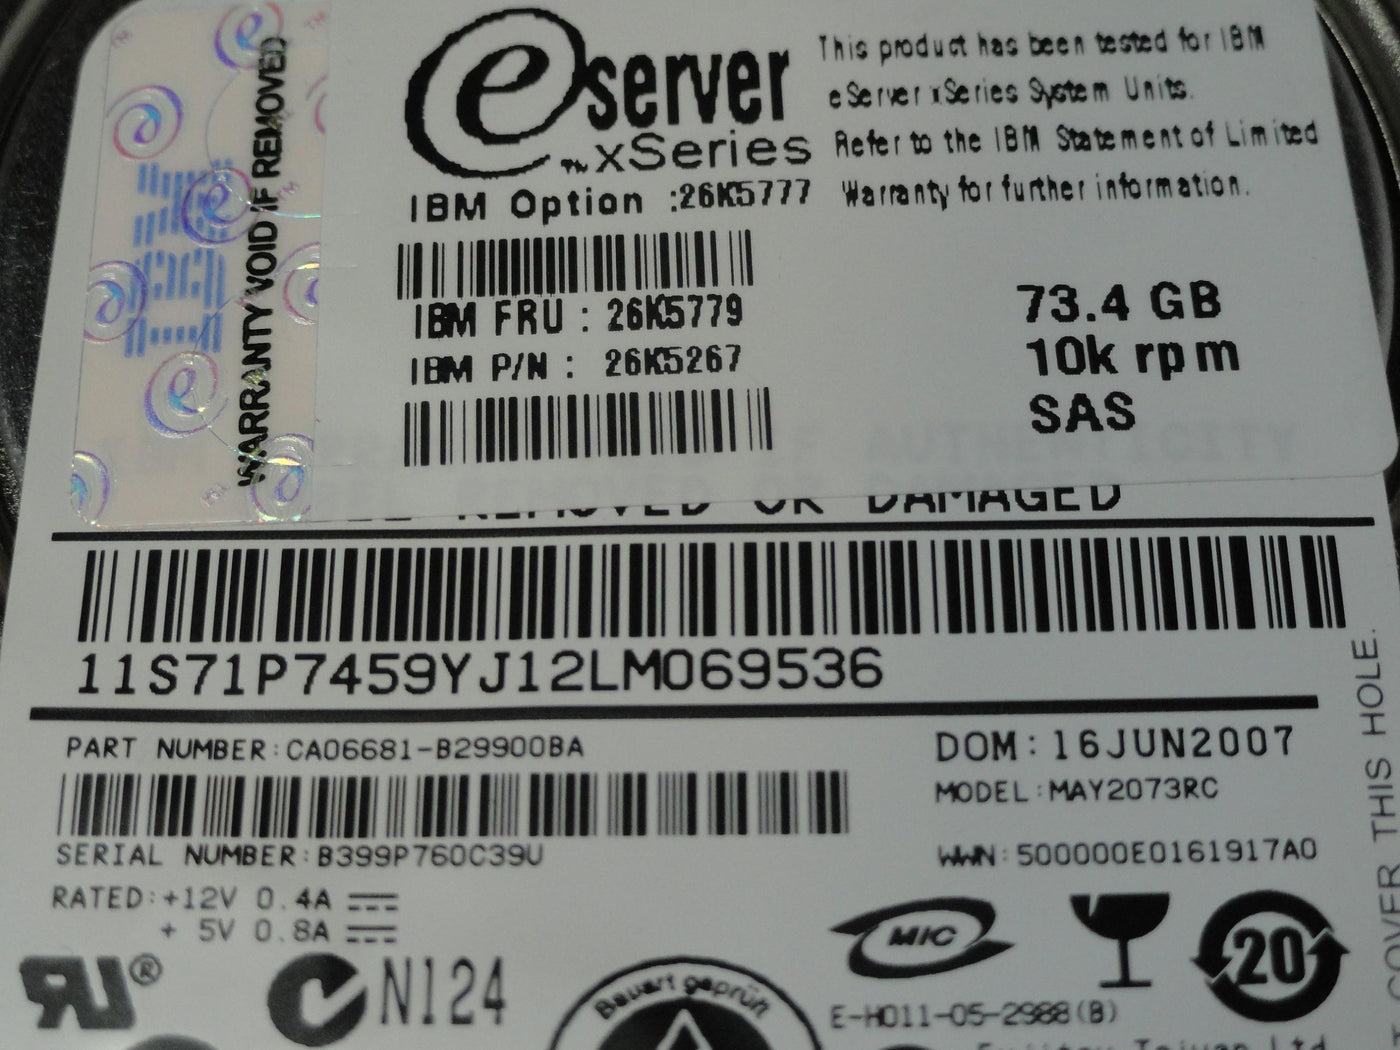 PR20183_CA06681-B29900BA_Fujitsu IBM 73Gb SATA 10Krpm 2.5in HDD - Image3